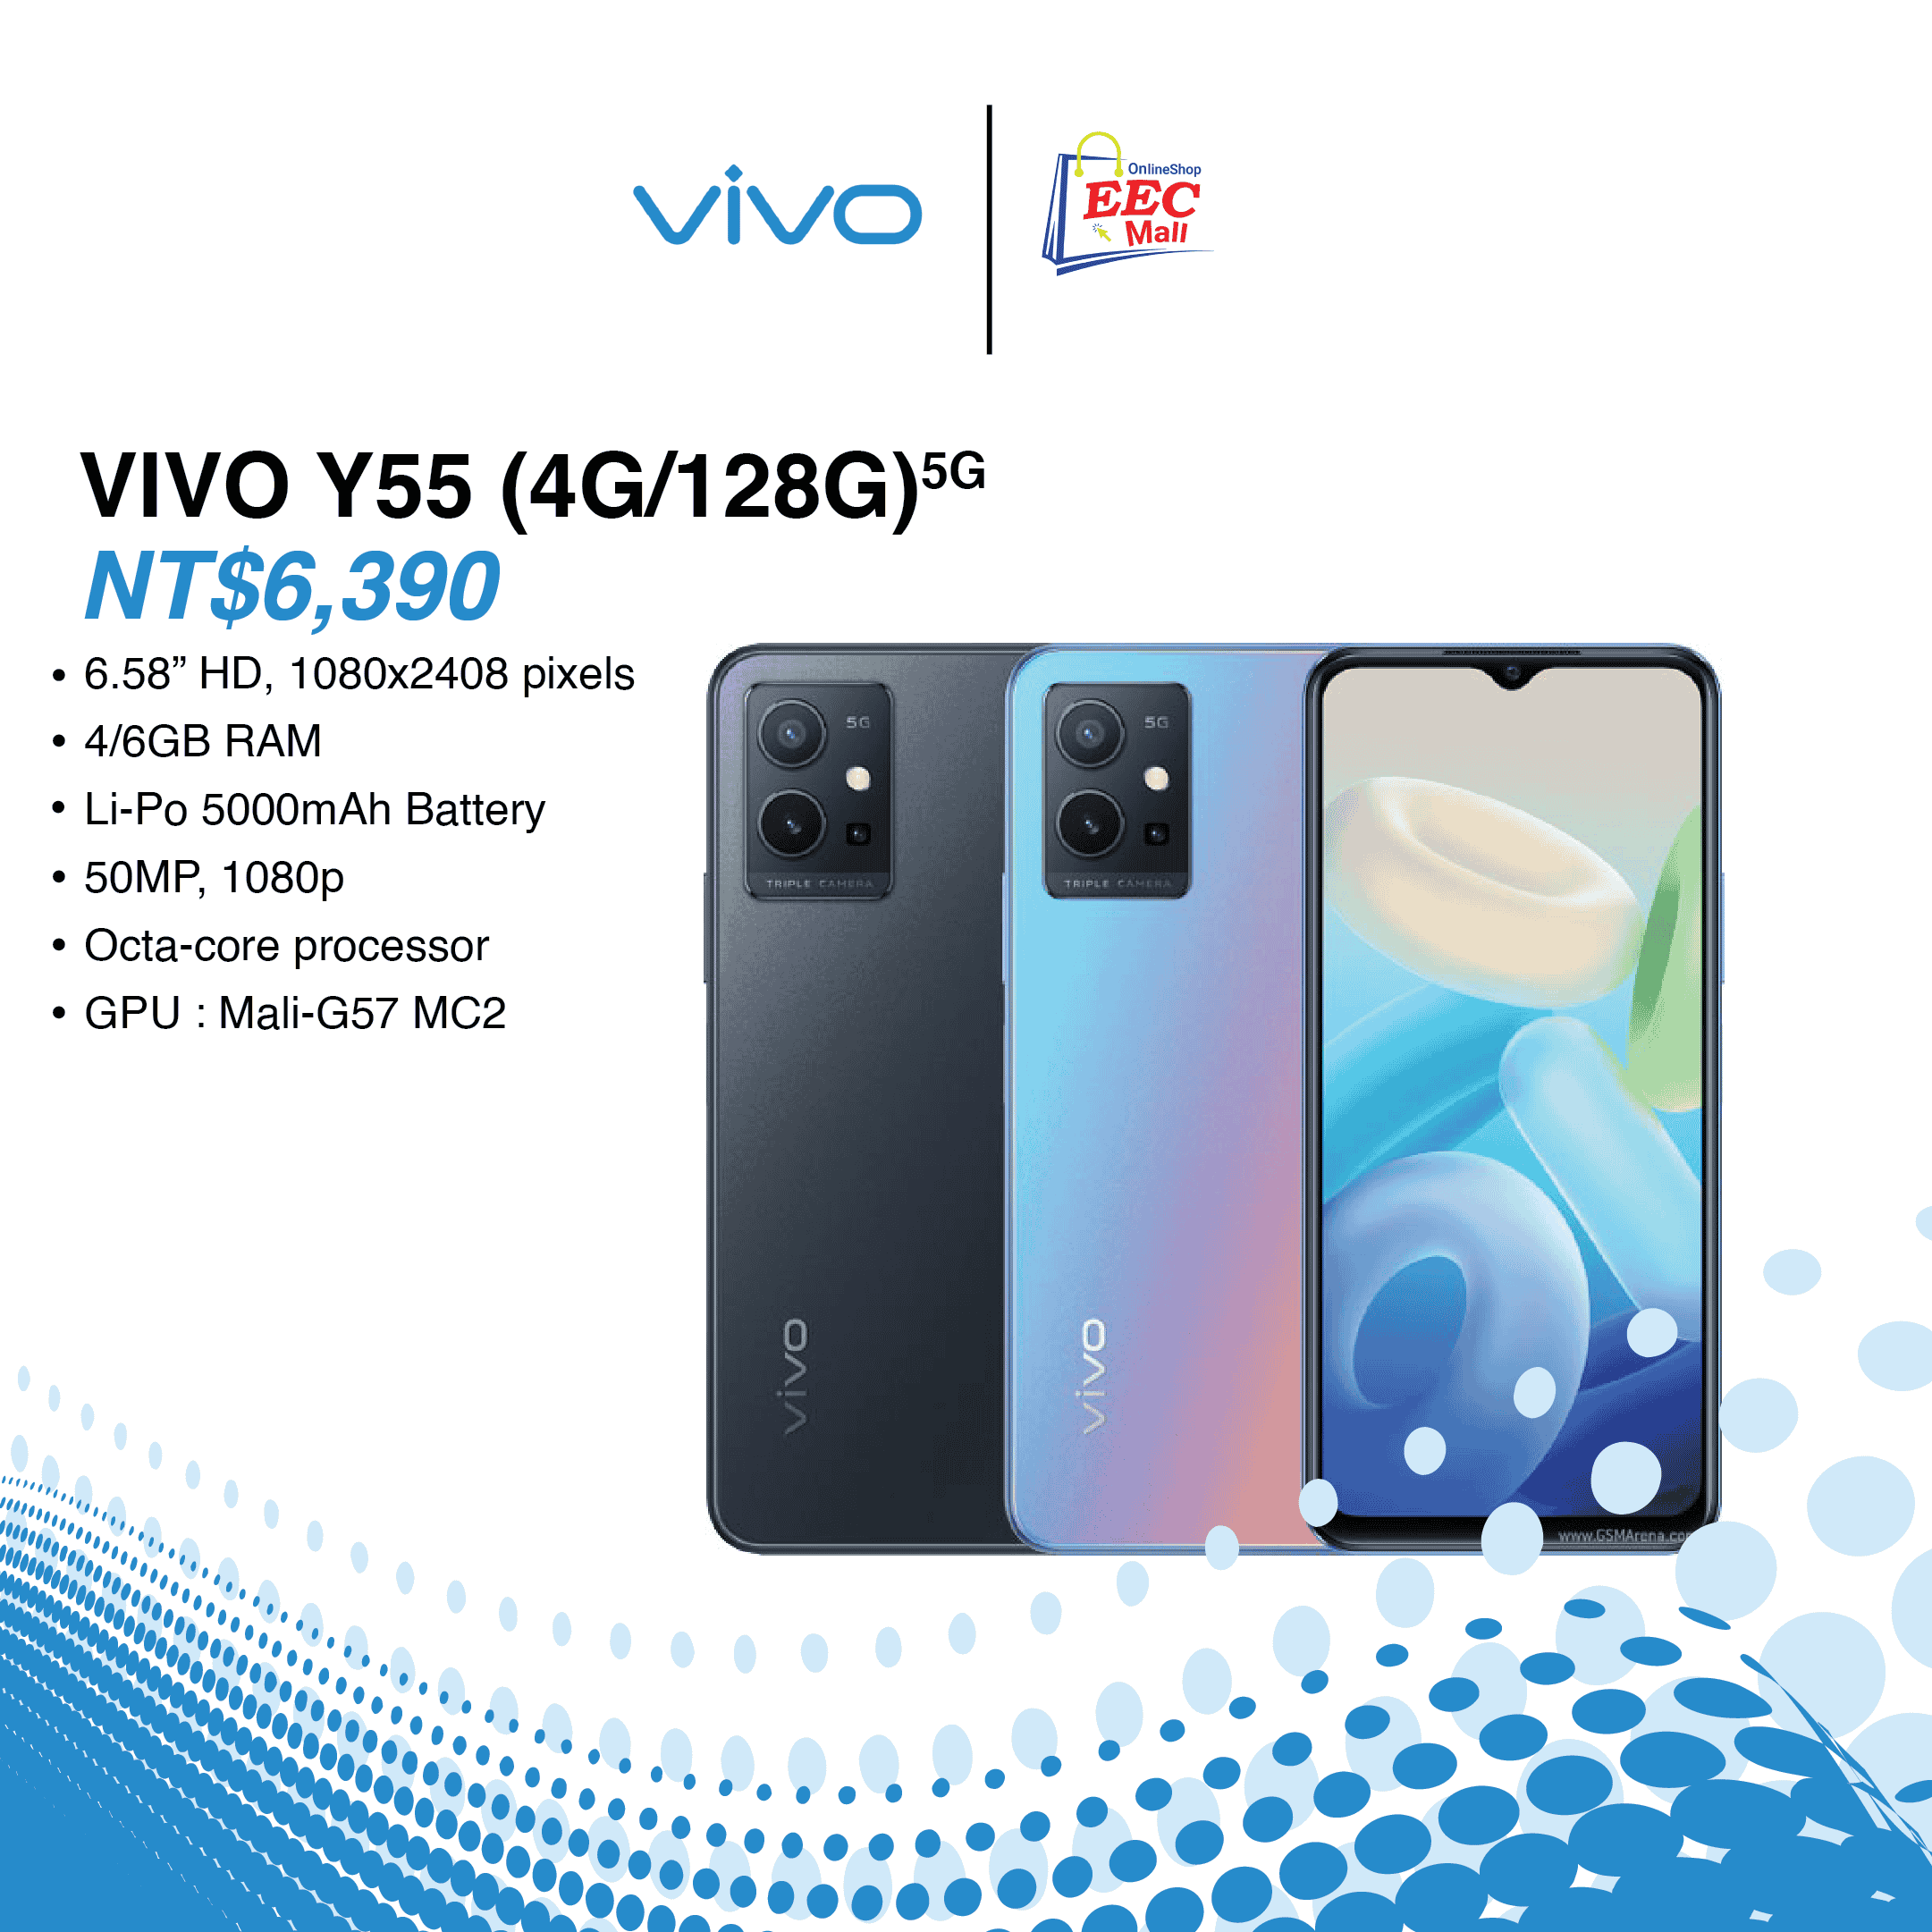 Vivo Y55 (4G/128G) 5G